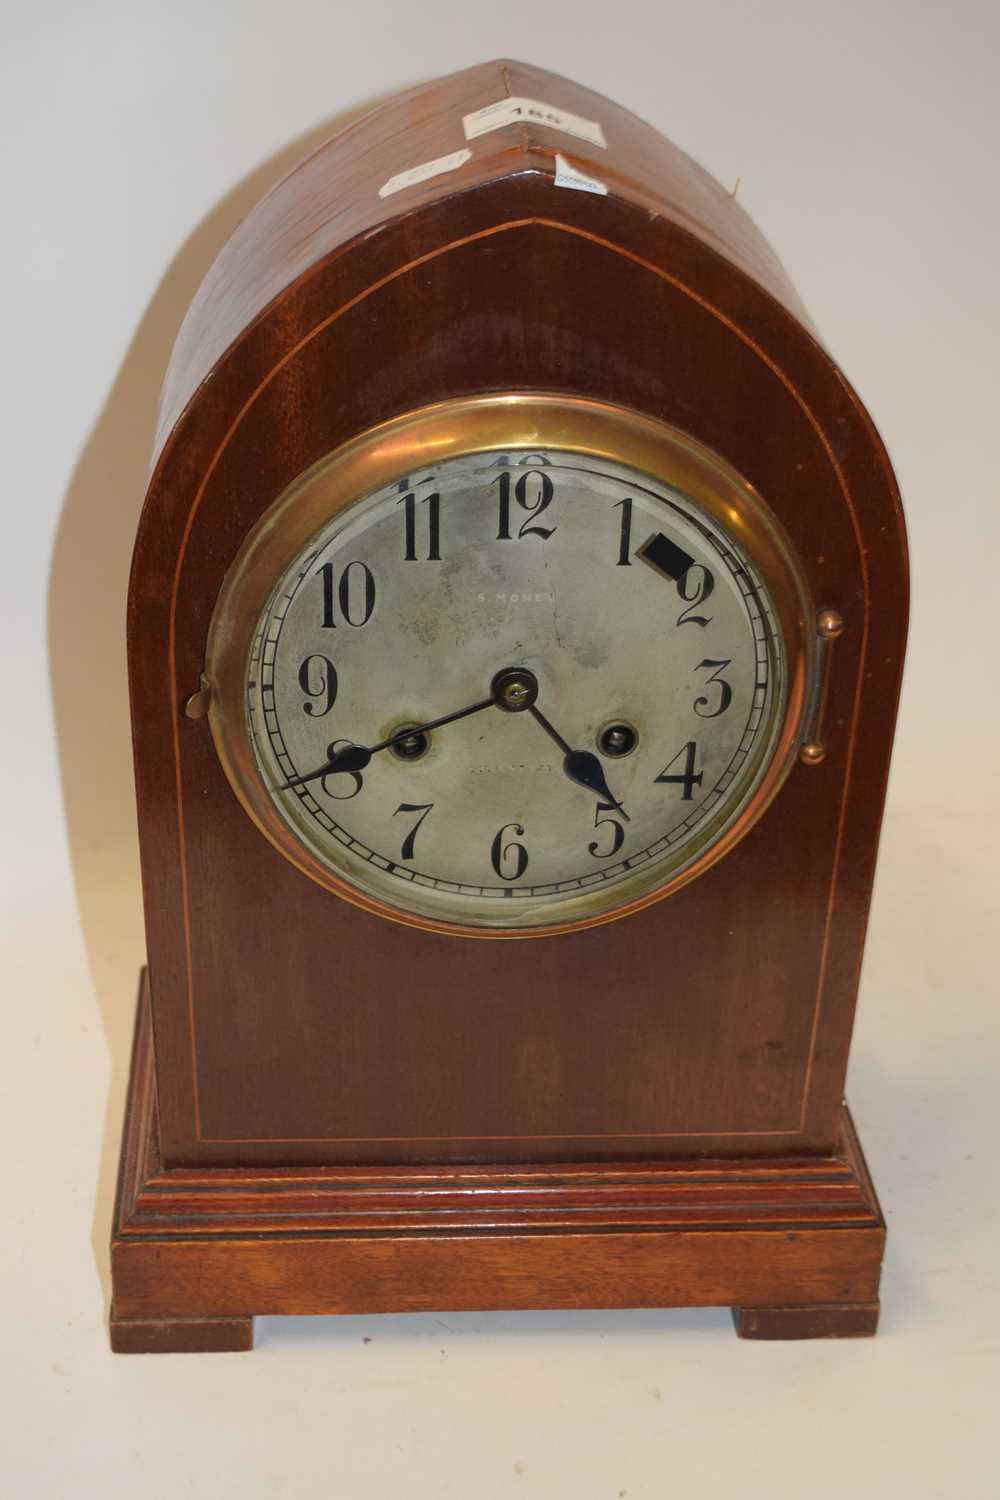 Early 20th Century mantel clock in mahogany veneered lancet shaped case